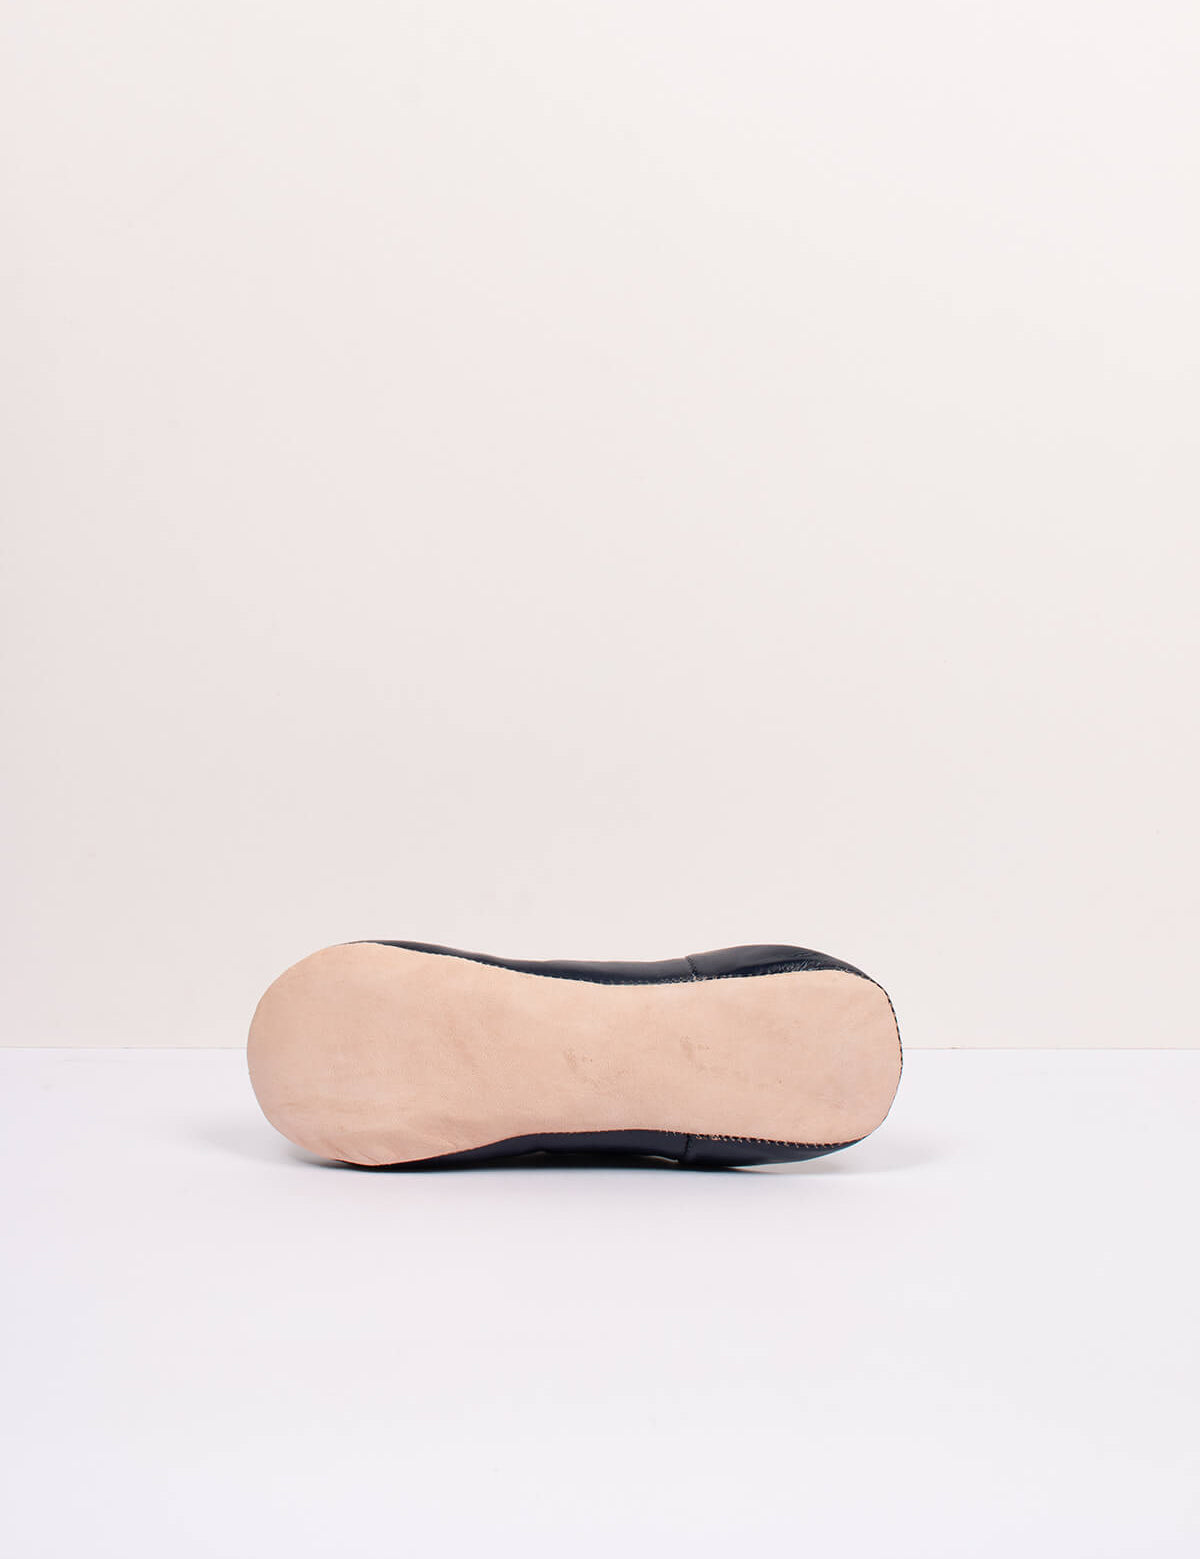 bohemia-design-moroccan-babouche-slippers-underside-indigo_5884ba65-52fc-4d0c-9077-b202d961008e.jpg